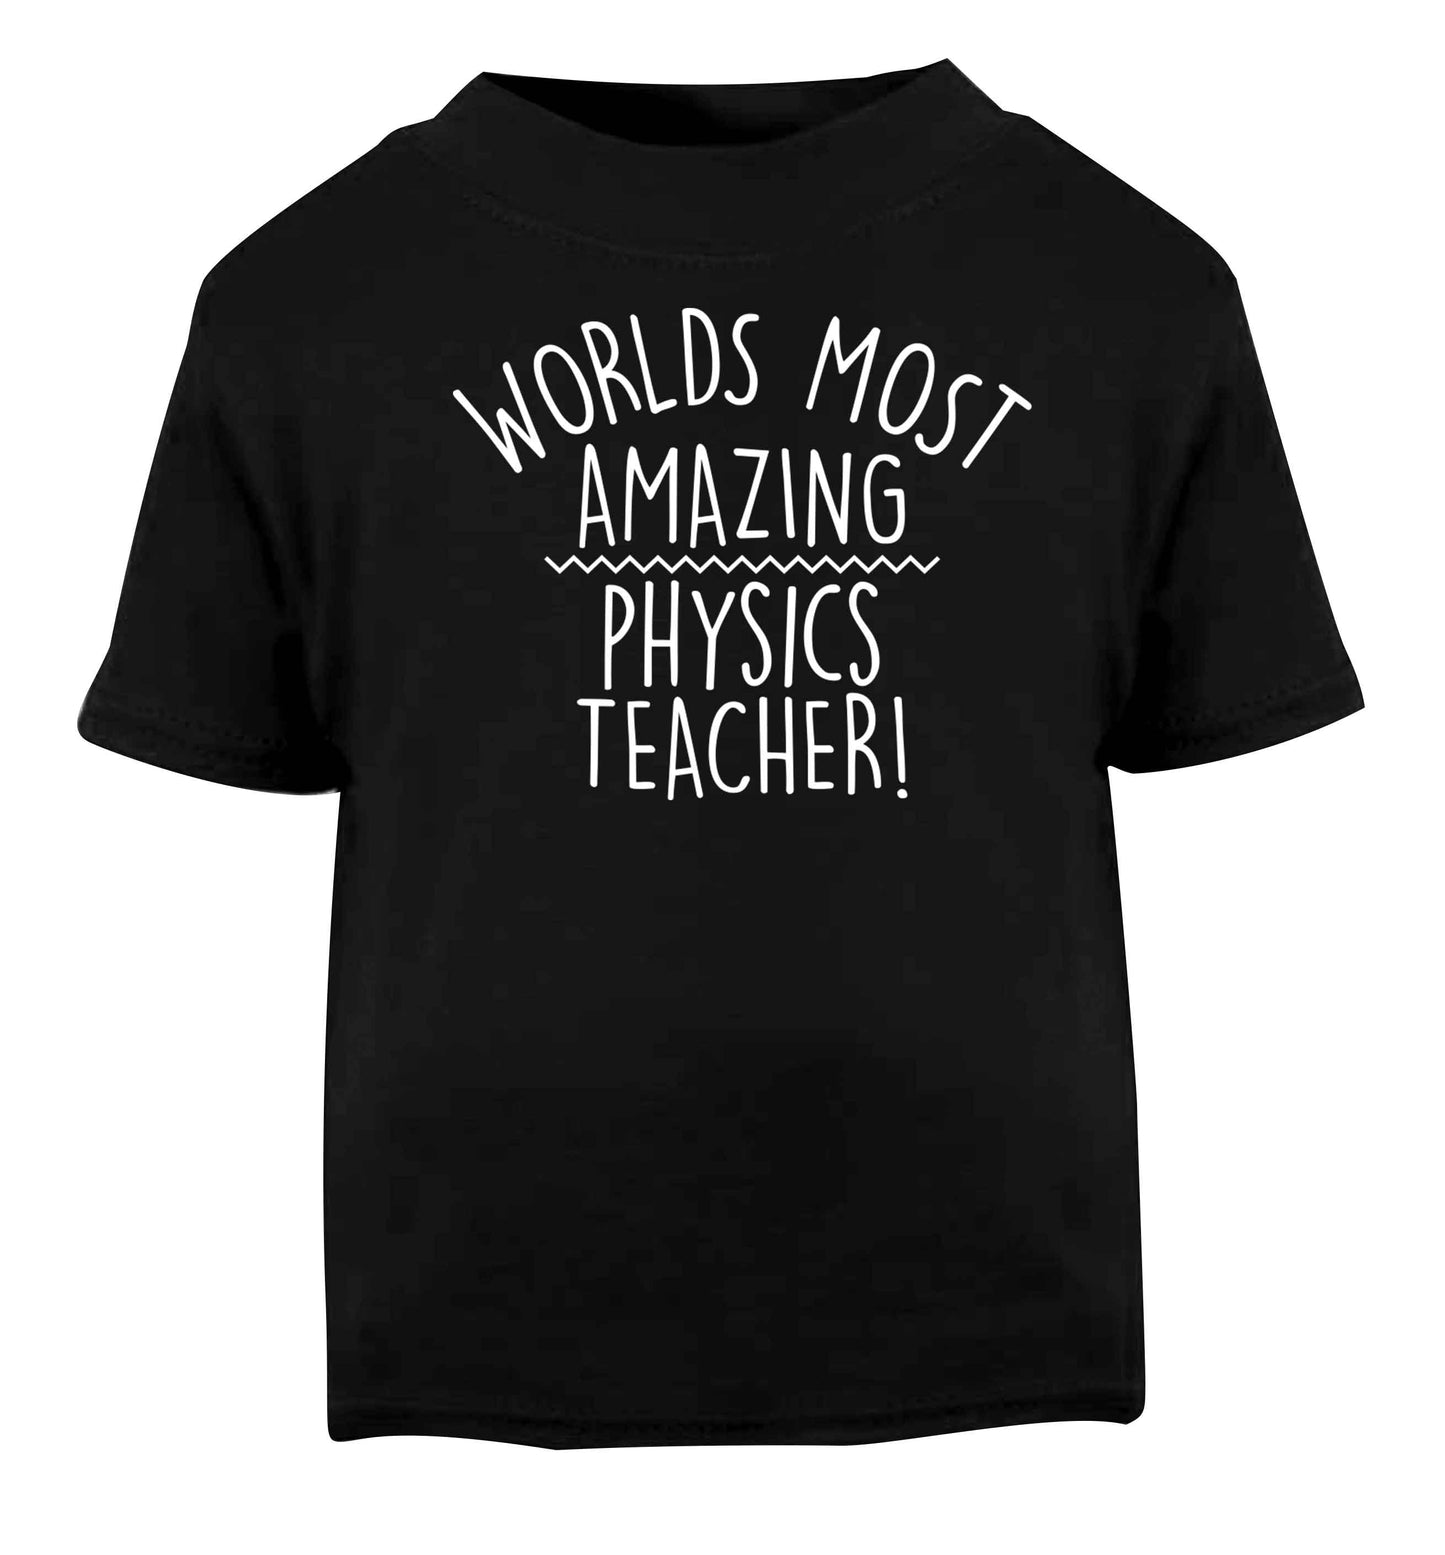 Worlds most amazing physics teacher Black baby toddler Tshirt 2 years